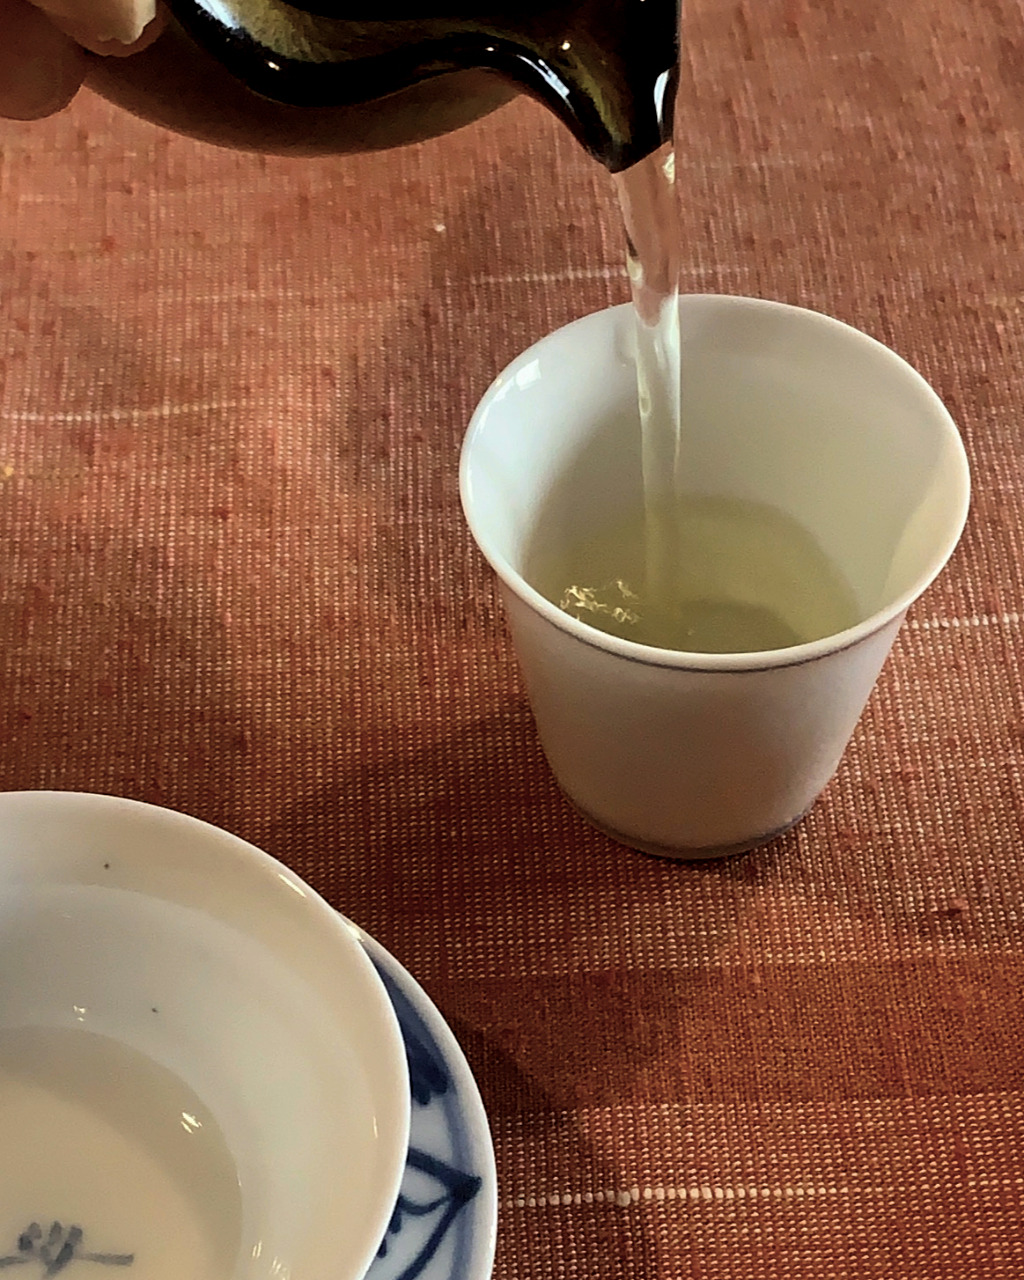 Pouring sencha tea at Mikoto Tea House in Kanazawa, Japan